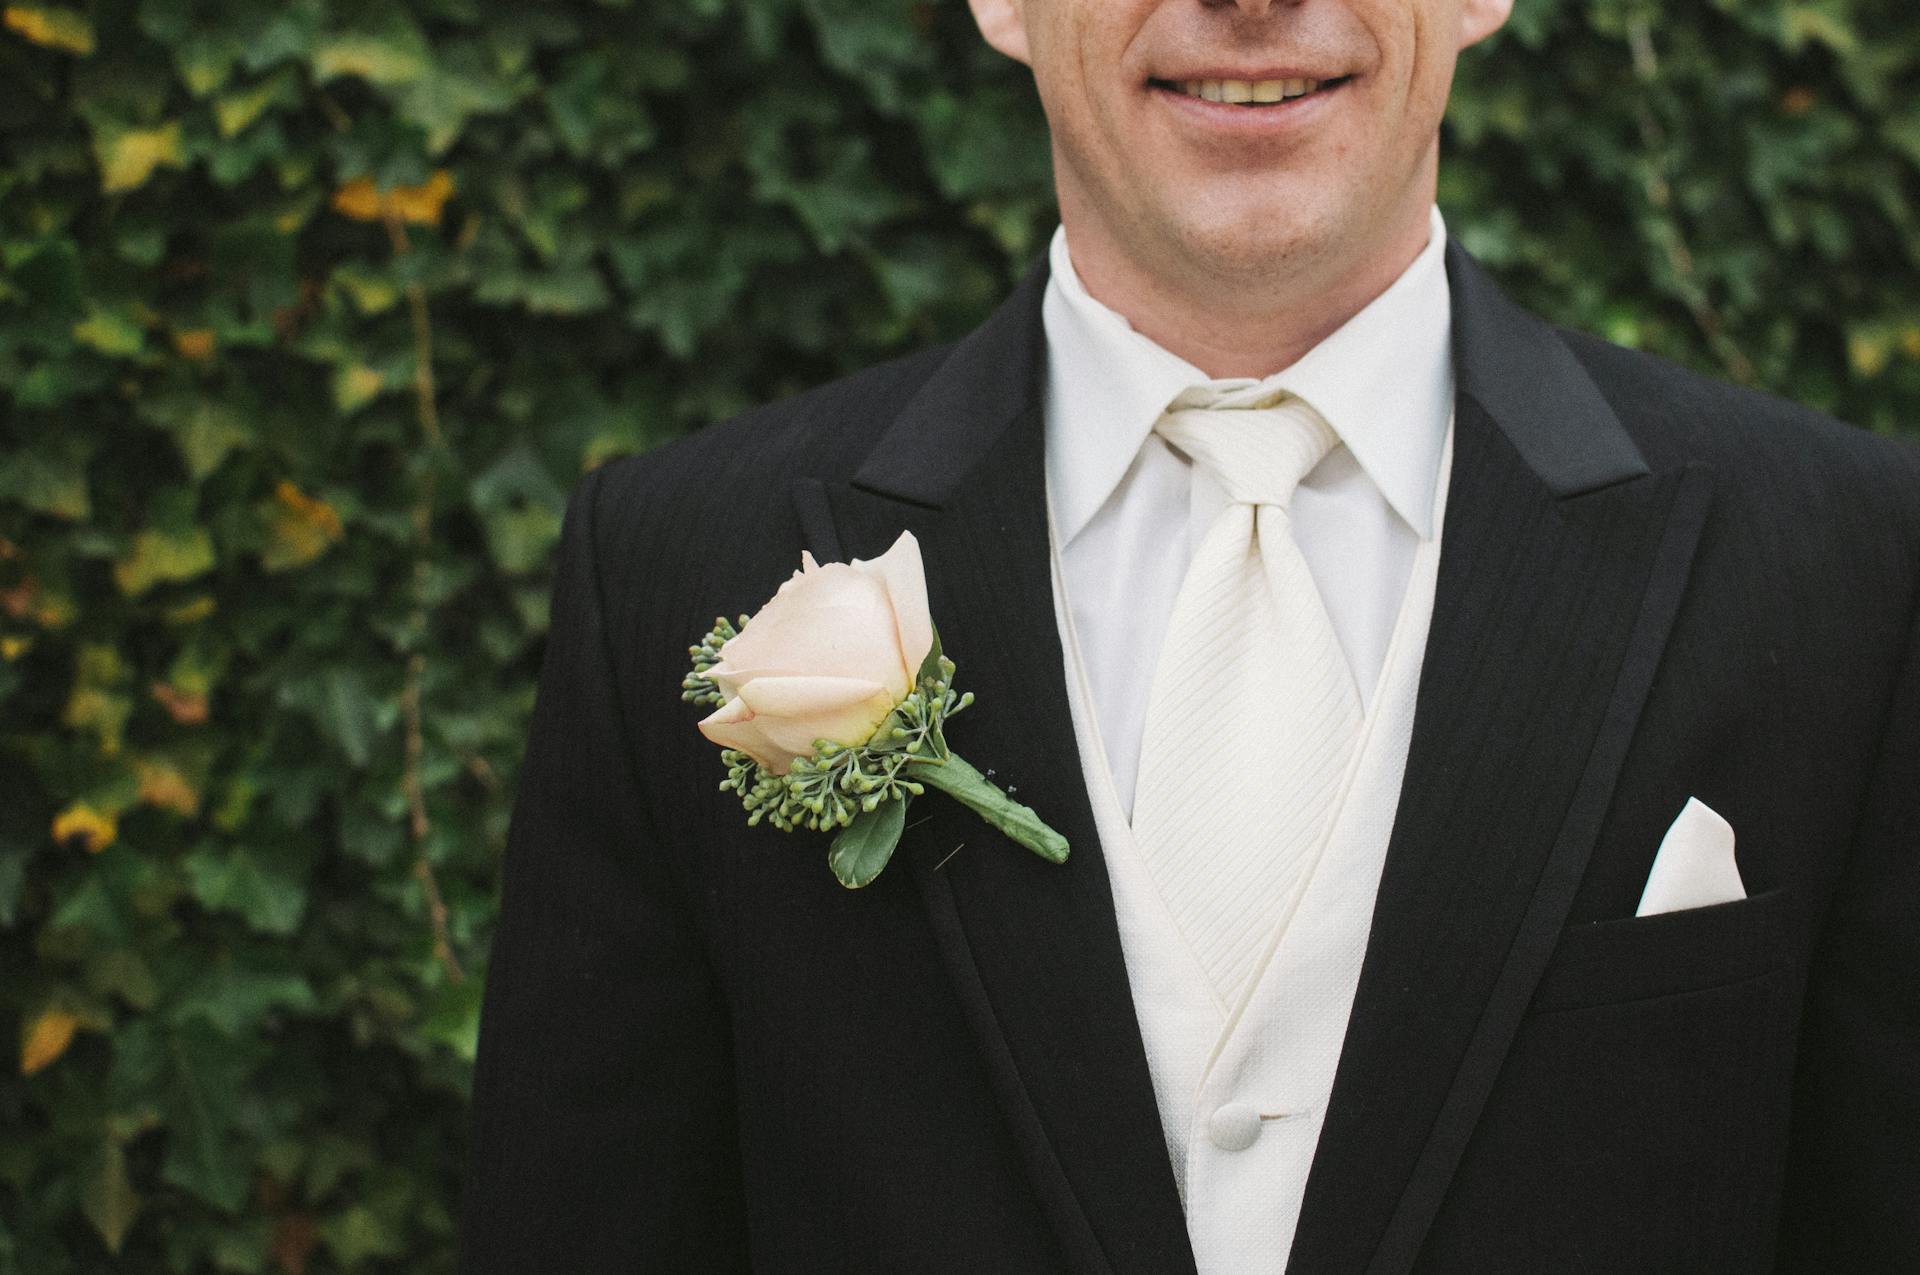 A smiling groom | Source: Pexels